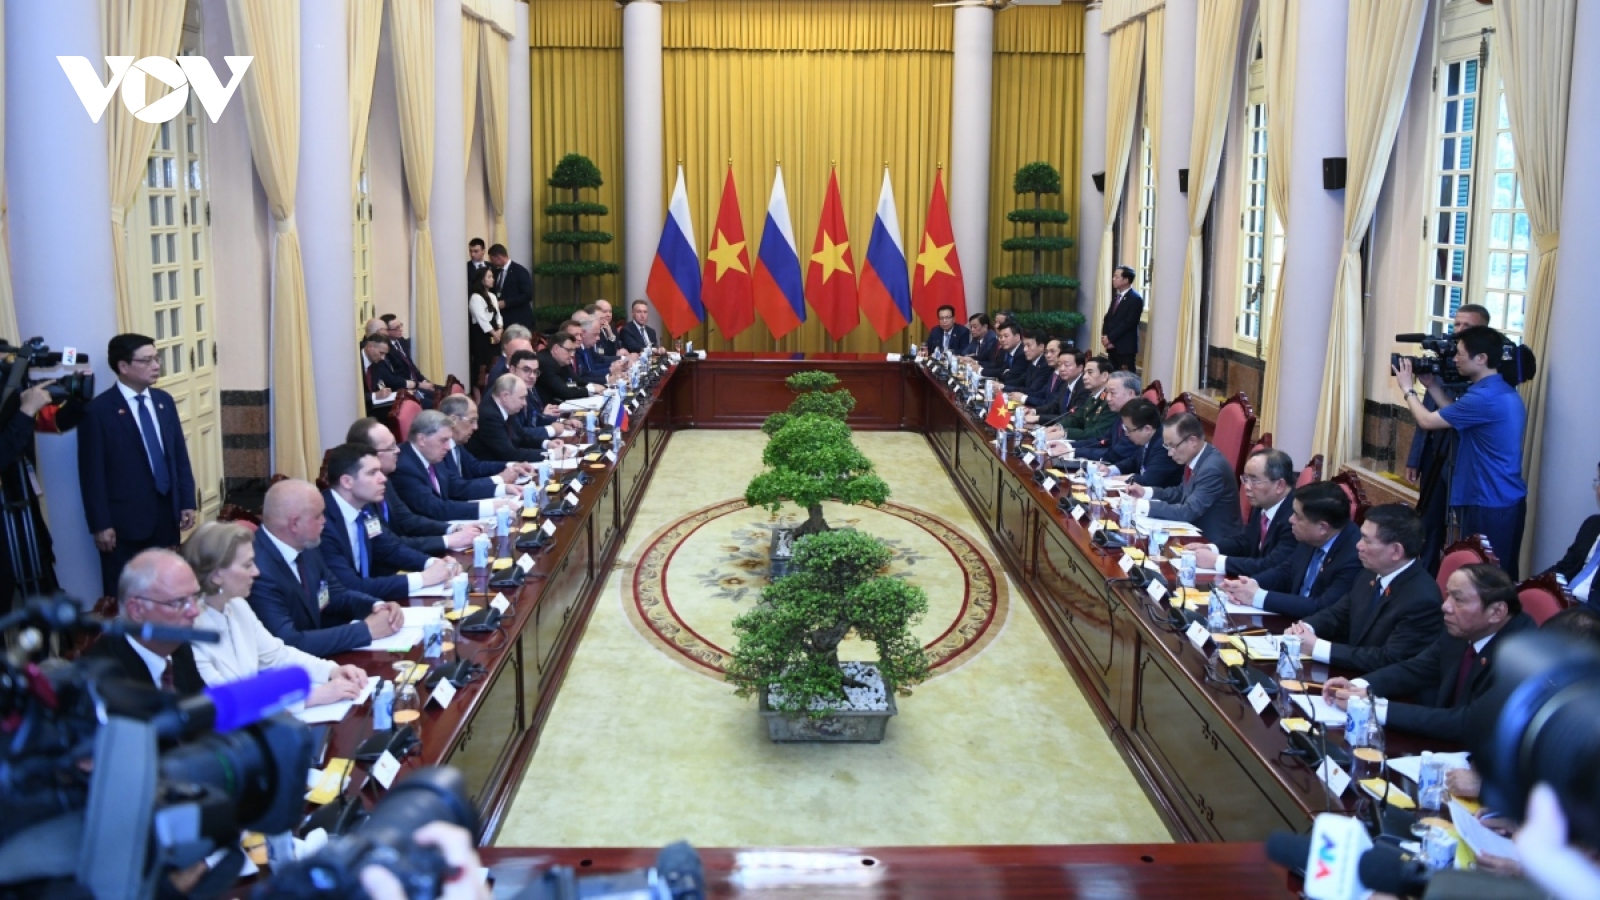 Russia, Vietnam share time-tested friendship: President Putin